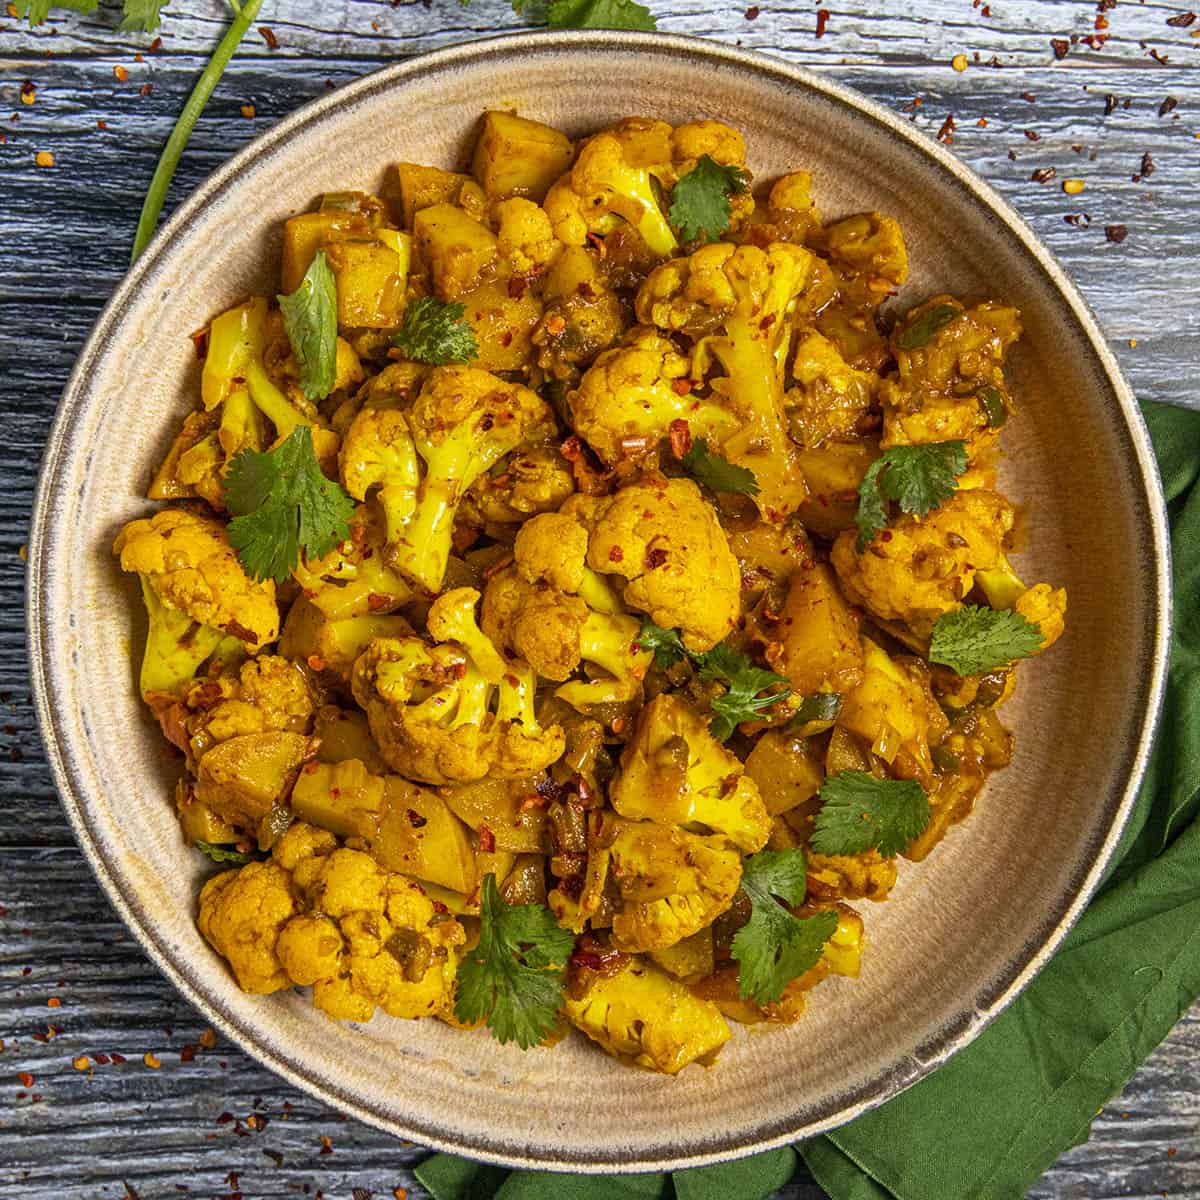 Aloo Gobi Recipe (Indian Spiced Potato and Cauliflower) - Chili Pepper ...